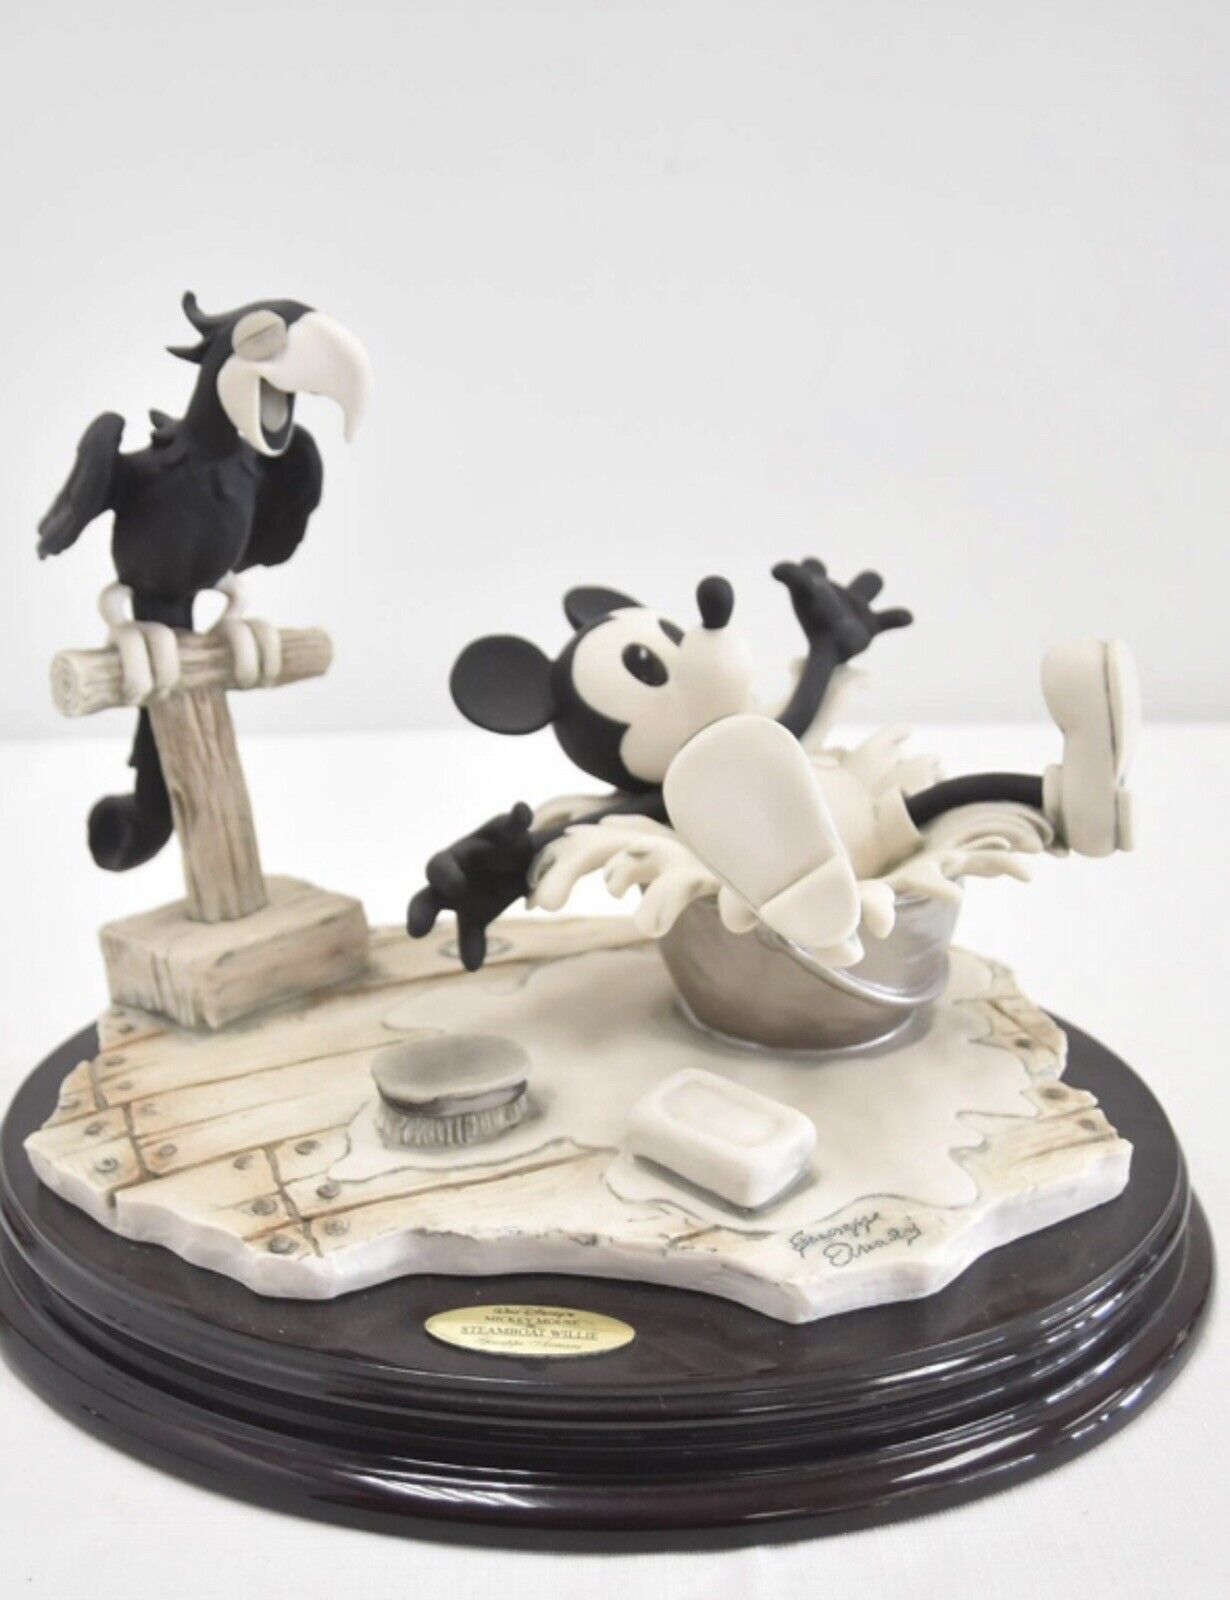 Disney NO Box Giuseppe Armani  Mickey Steamboat Willie Limited Edition 1000 mint figure